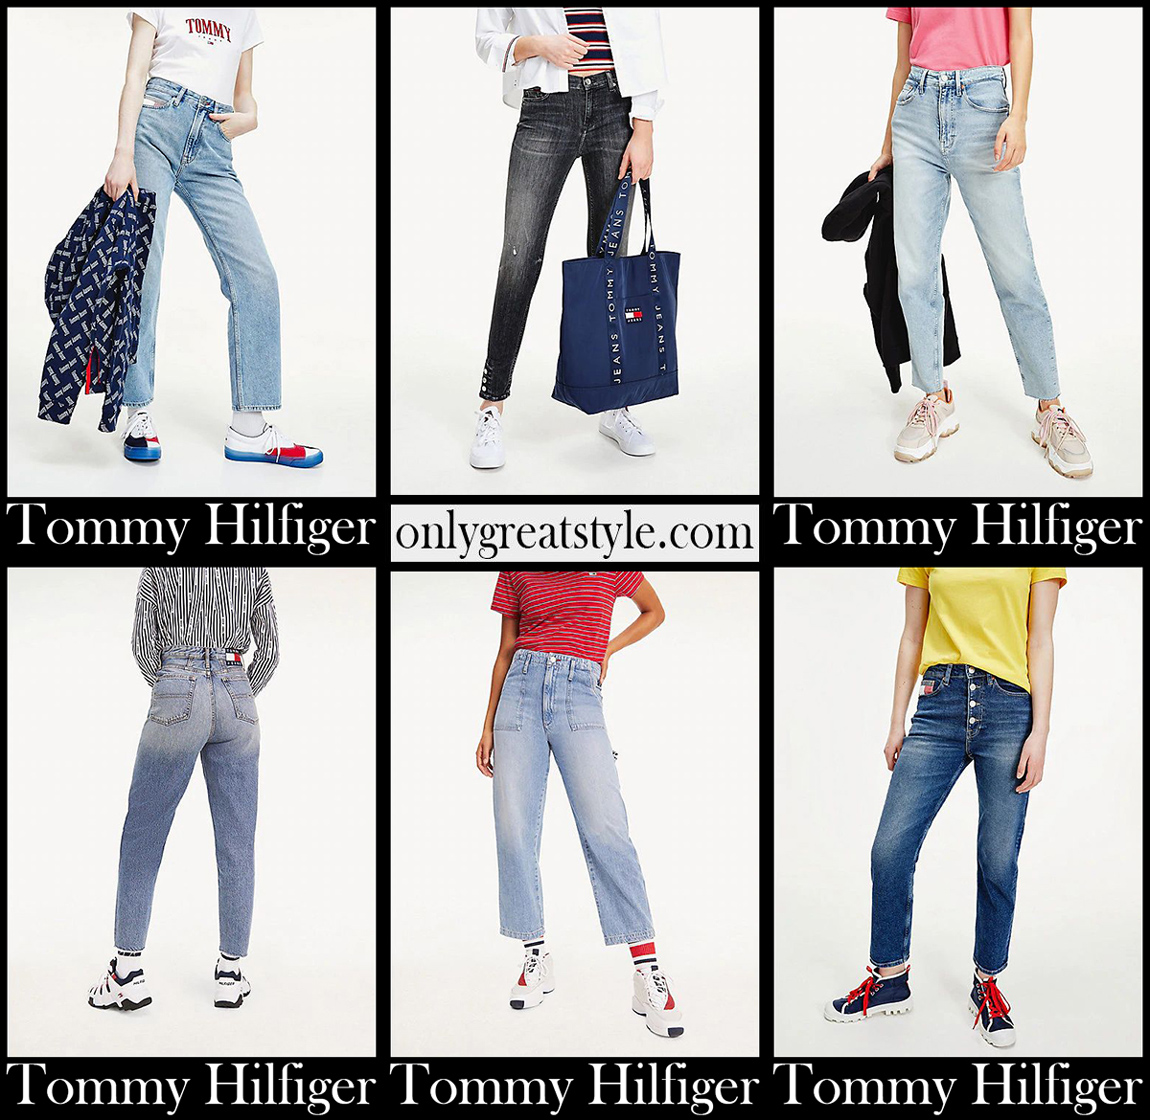 Tommy Hilfiger denim 2020 21 jeans womens clothing